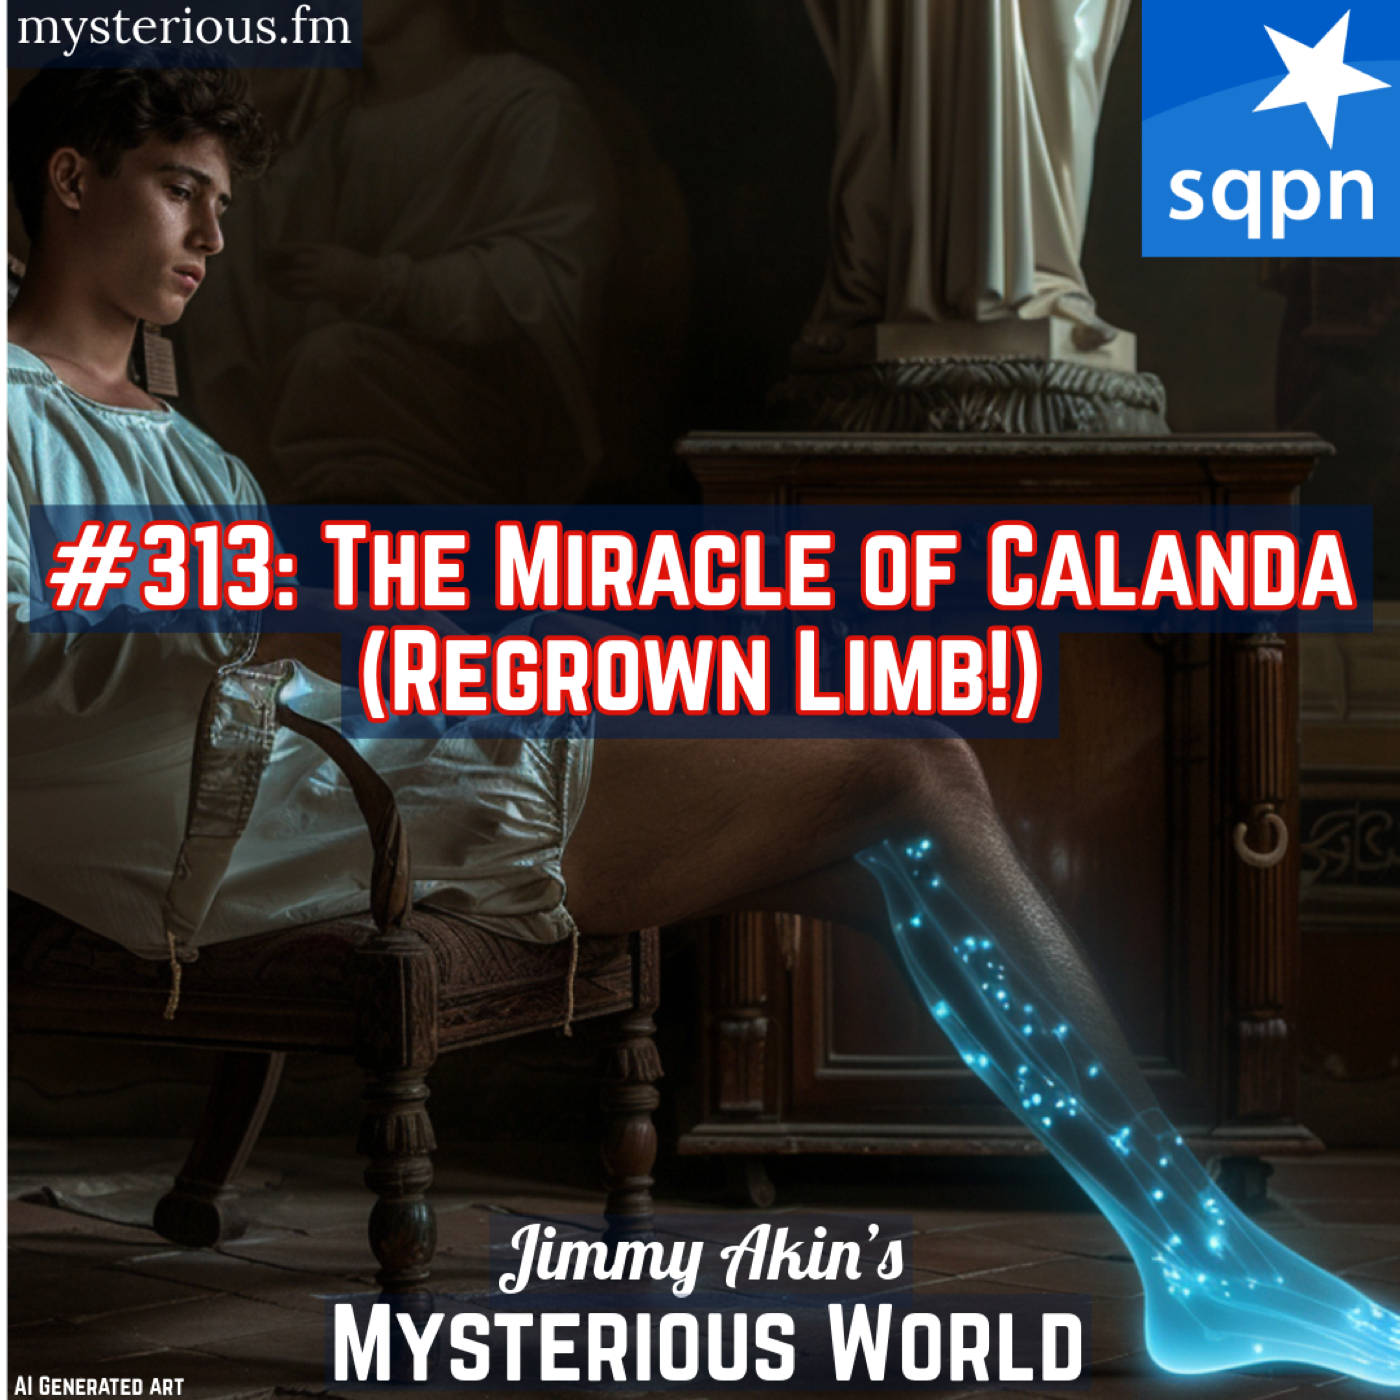 The Miracle of Calanda (Regrown Limb! Amputated Leg!)